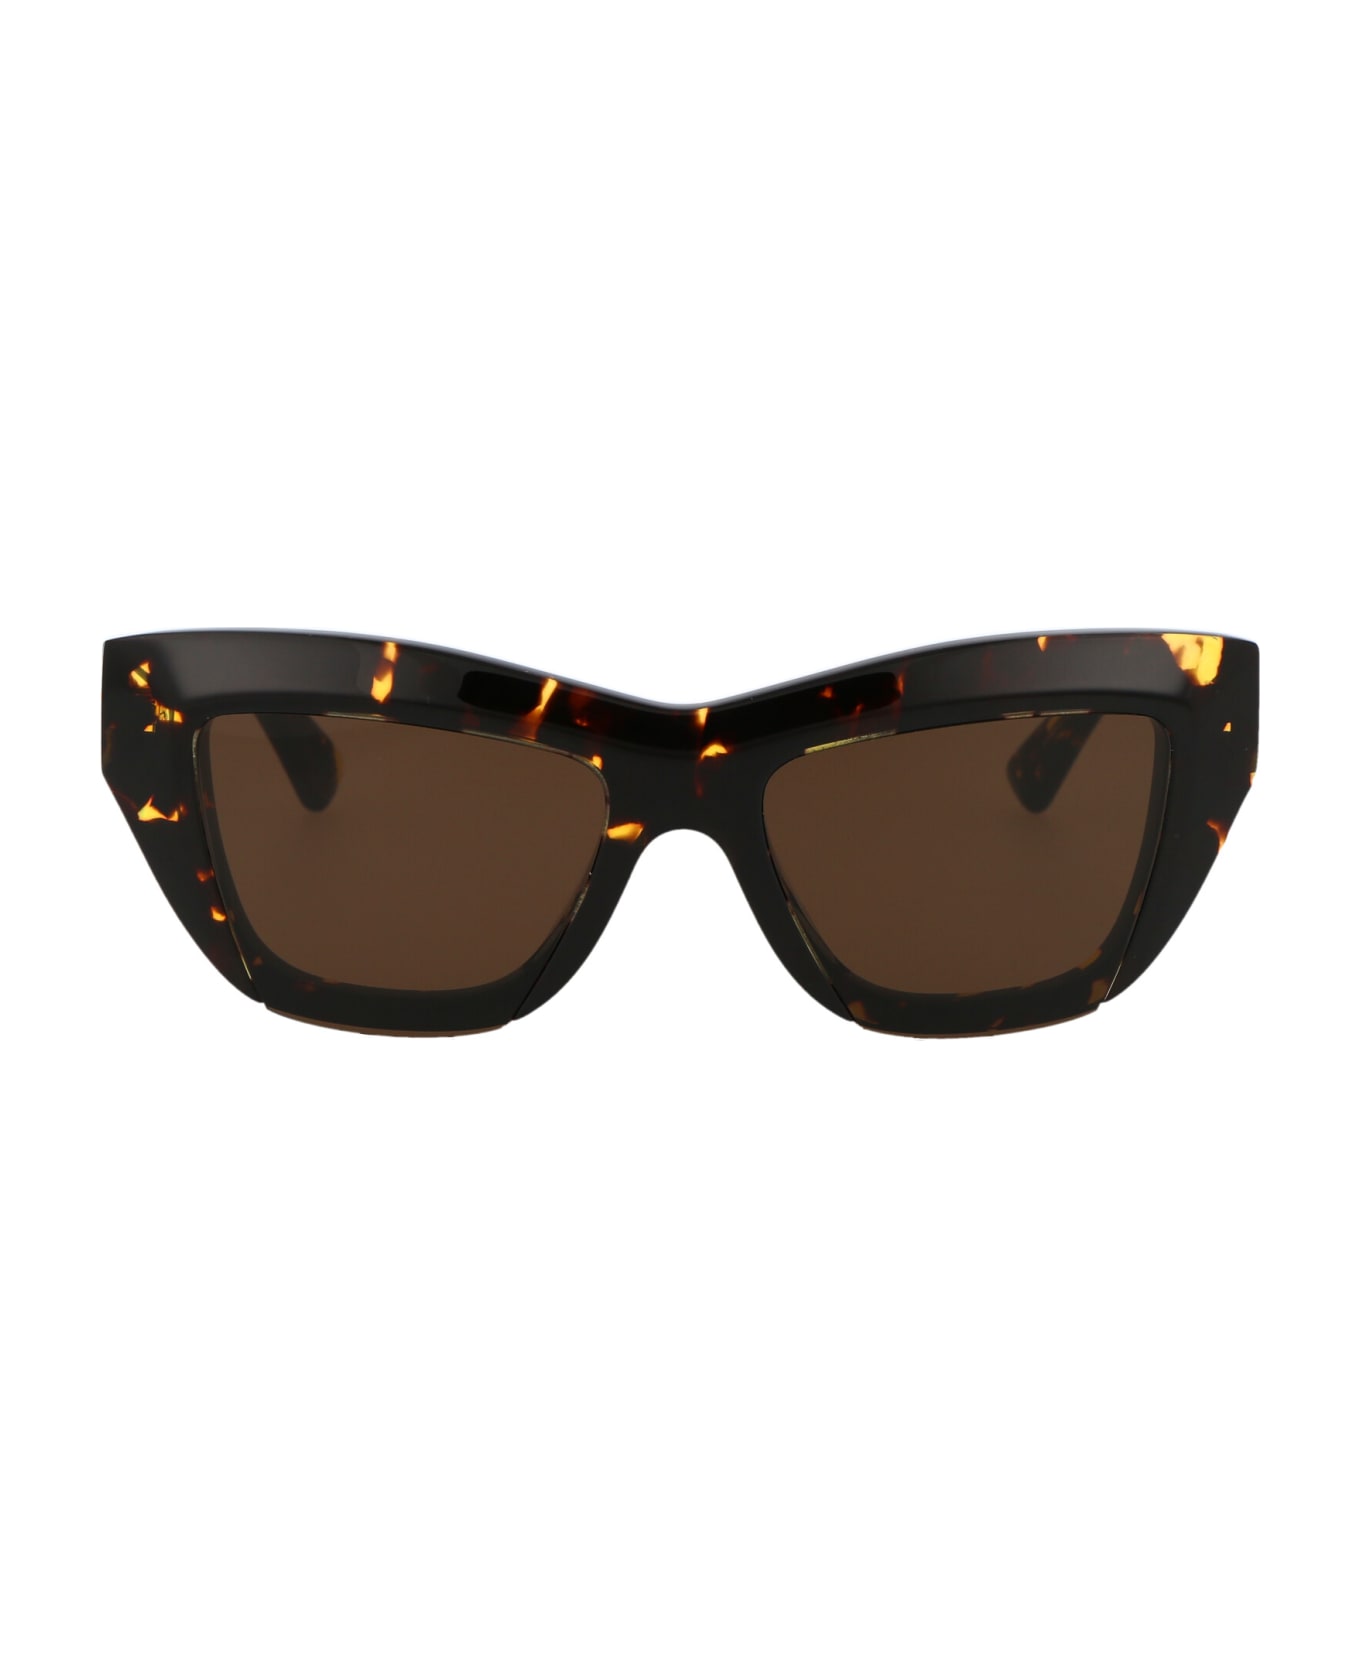 Bottega Veneta Eyewear Bv1218s Sunglasses - 002 HAVANA HAVANA BROWN